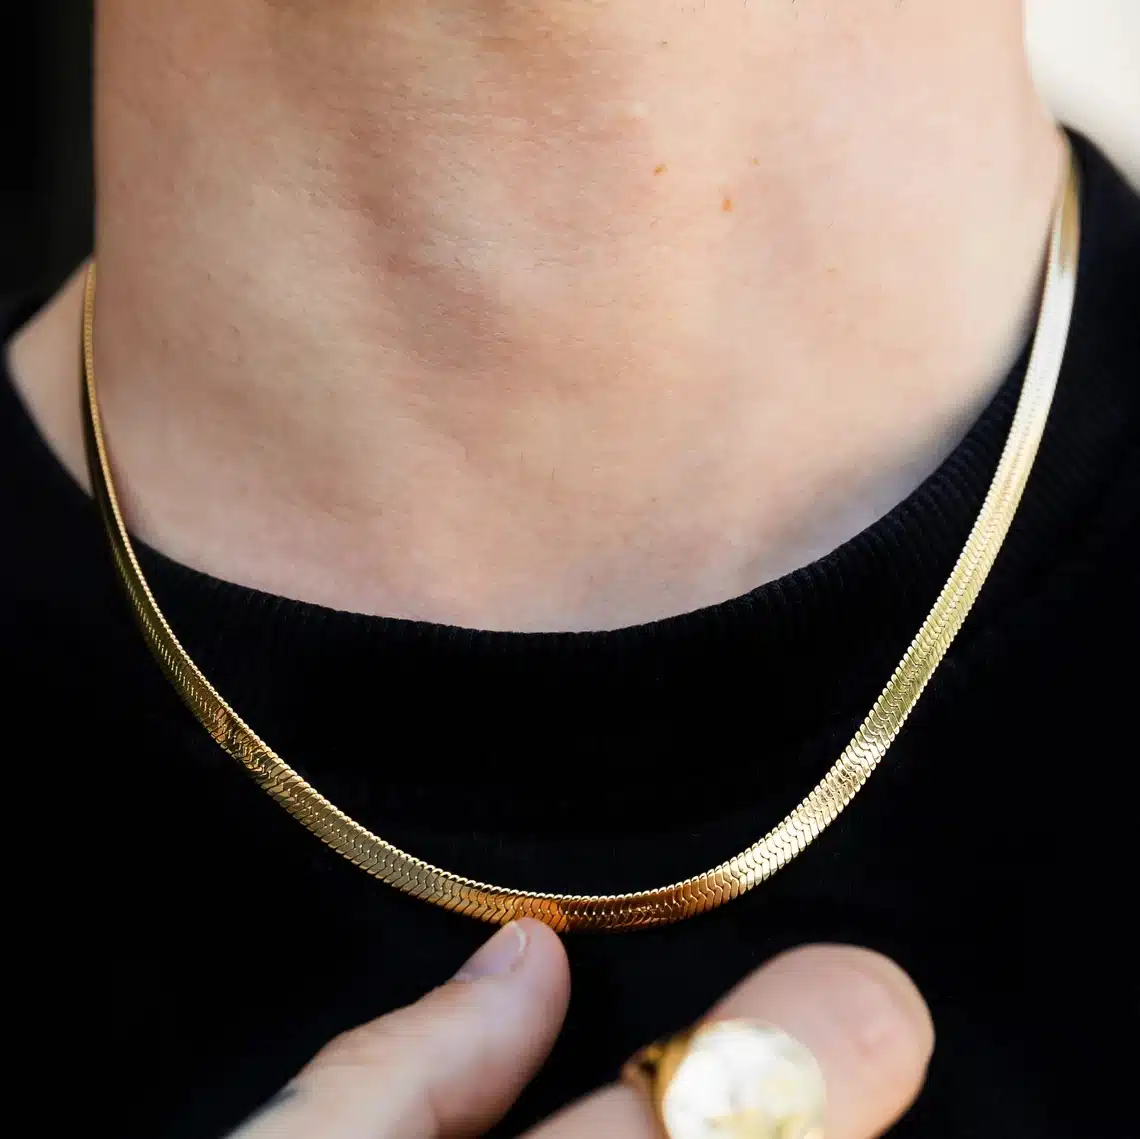 Mens Gold Compass Pendant, Gold Pendants for Men, Proclamation Jewelry